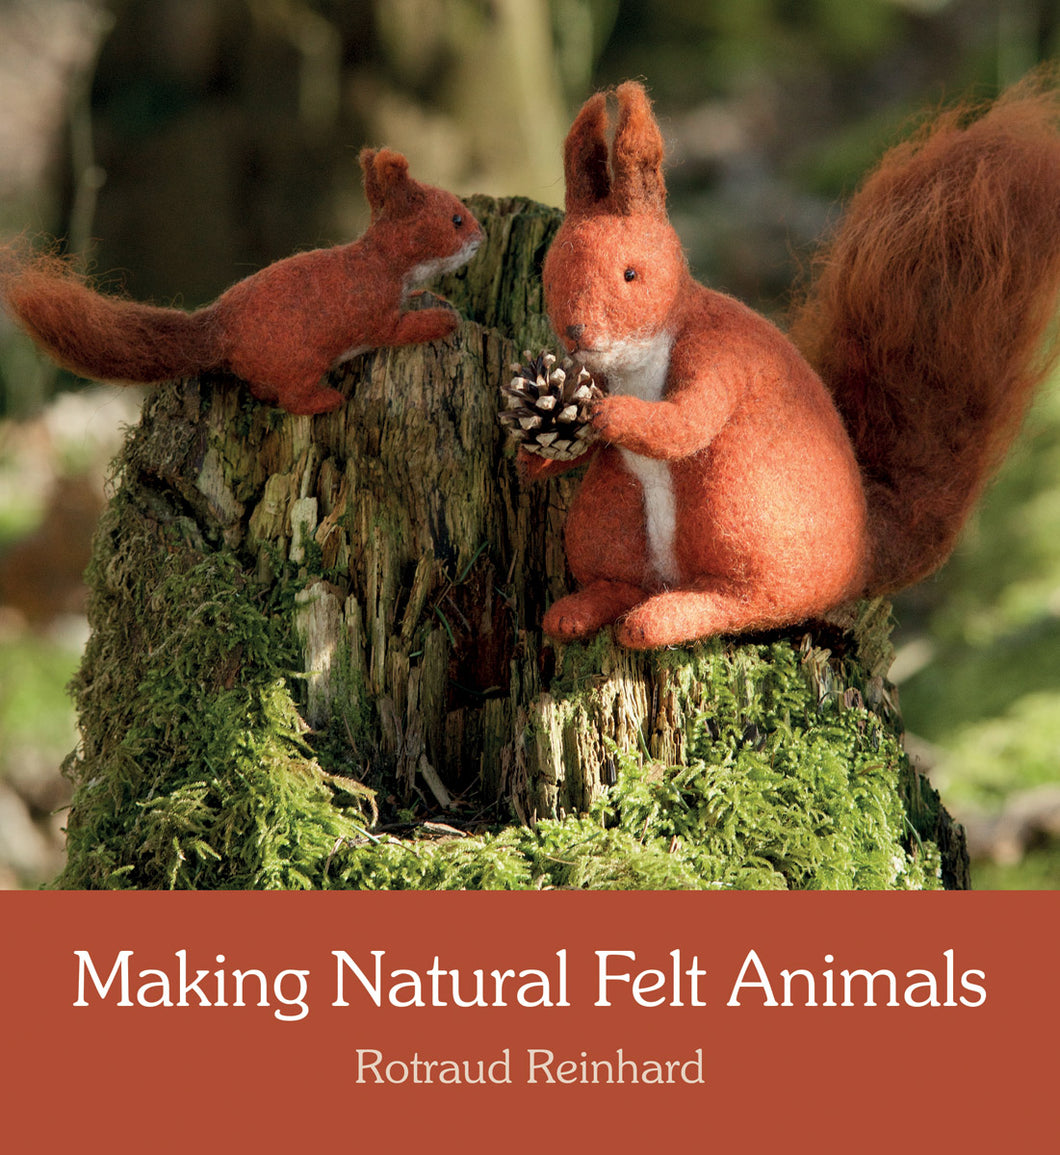 Making Natural Felt Animals by Rotraud Reinhard